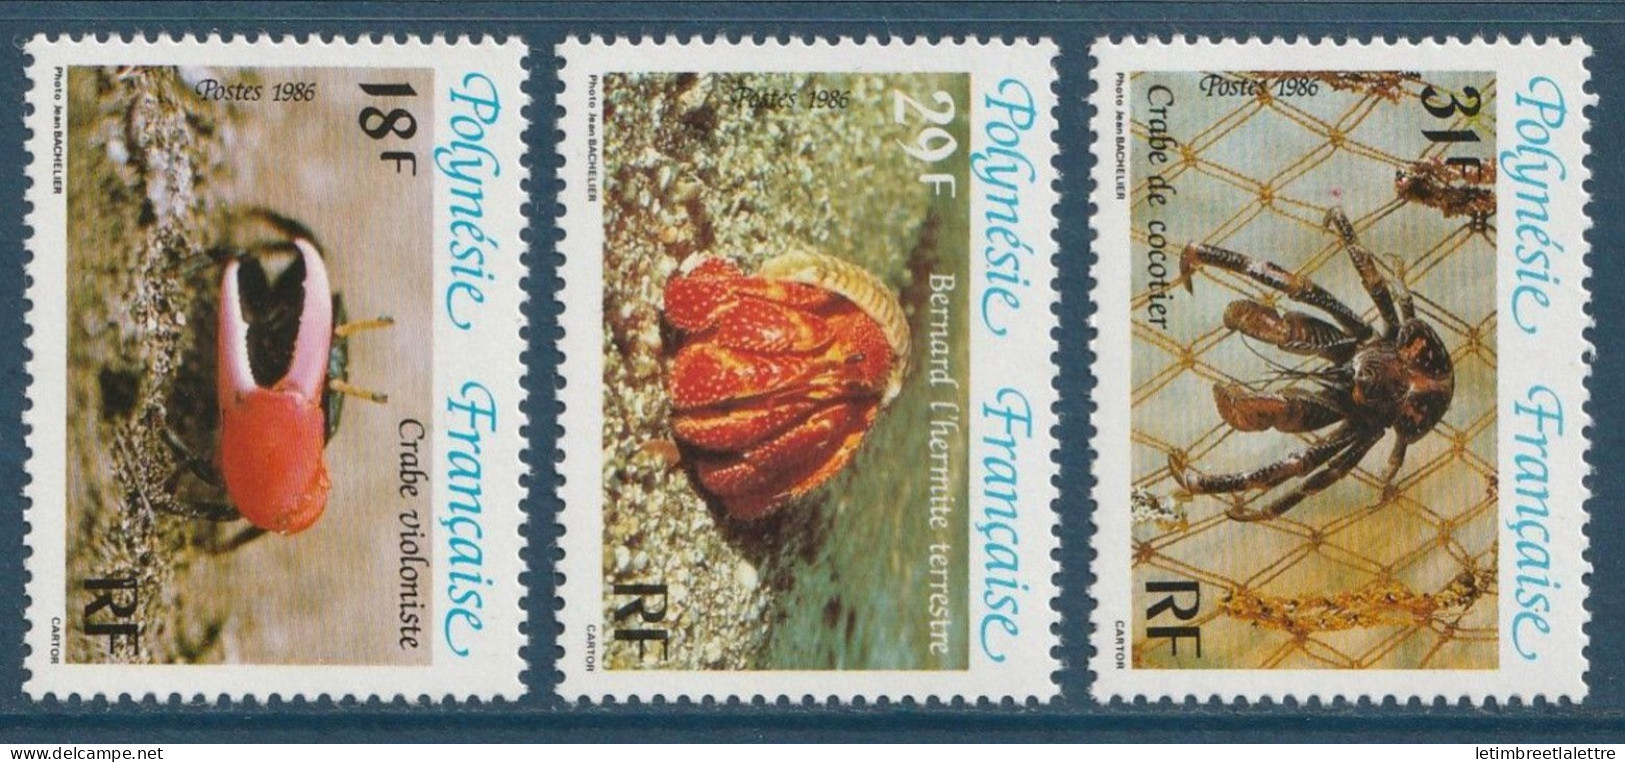 Polynésie Française - YT N° 246 à 248 ** - Neuf Sans Charnière - 1986 - Ongebruikt